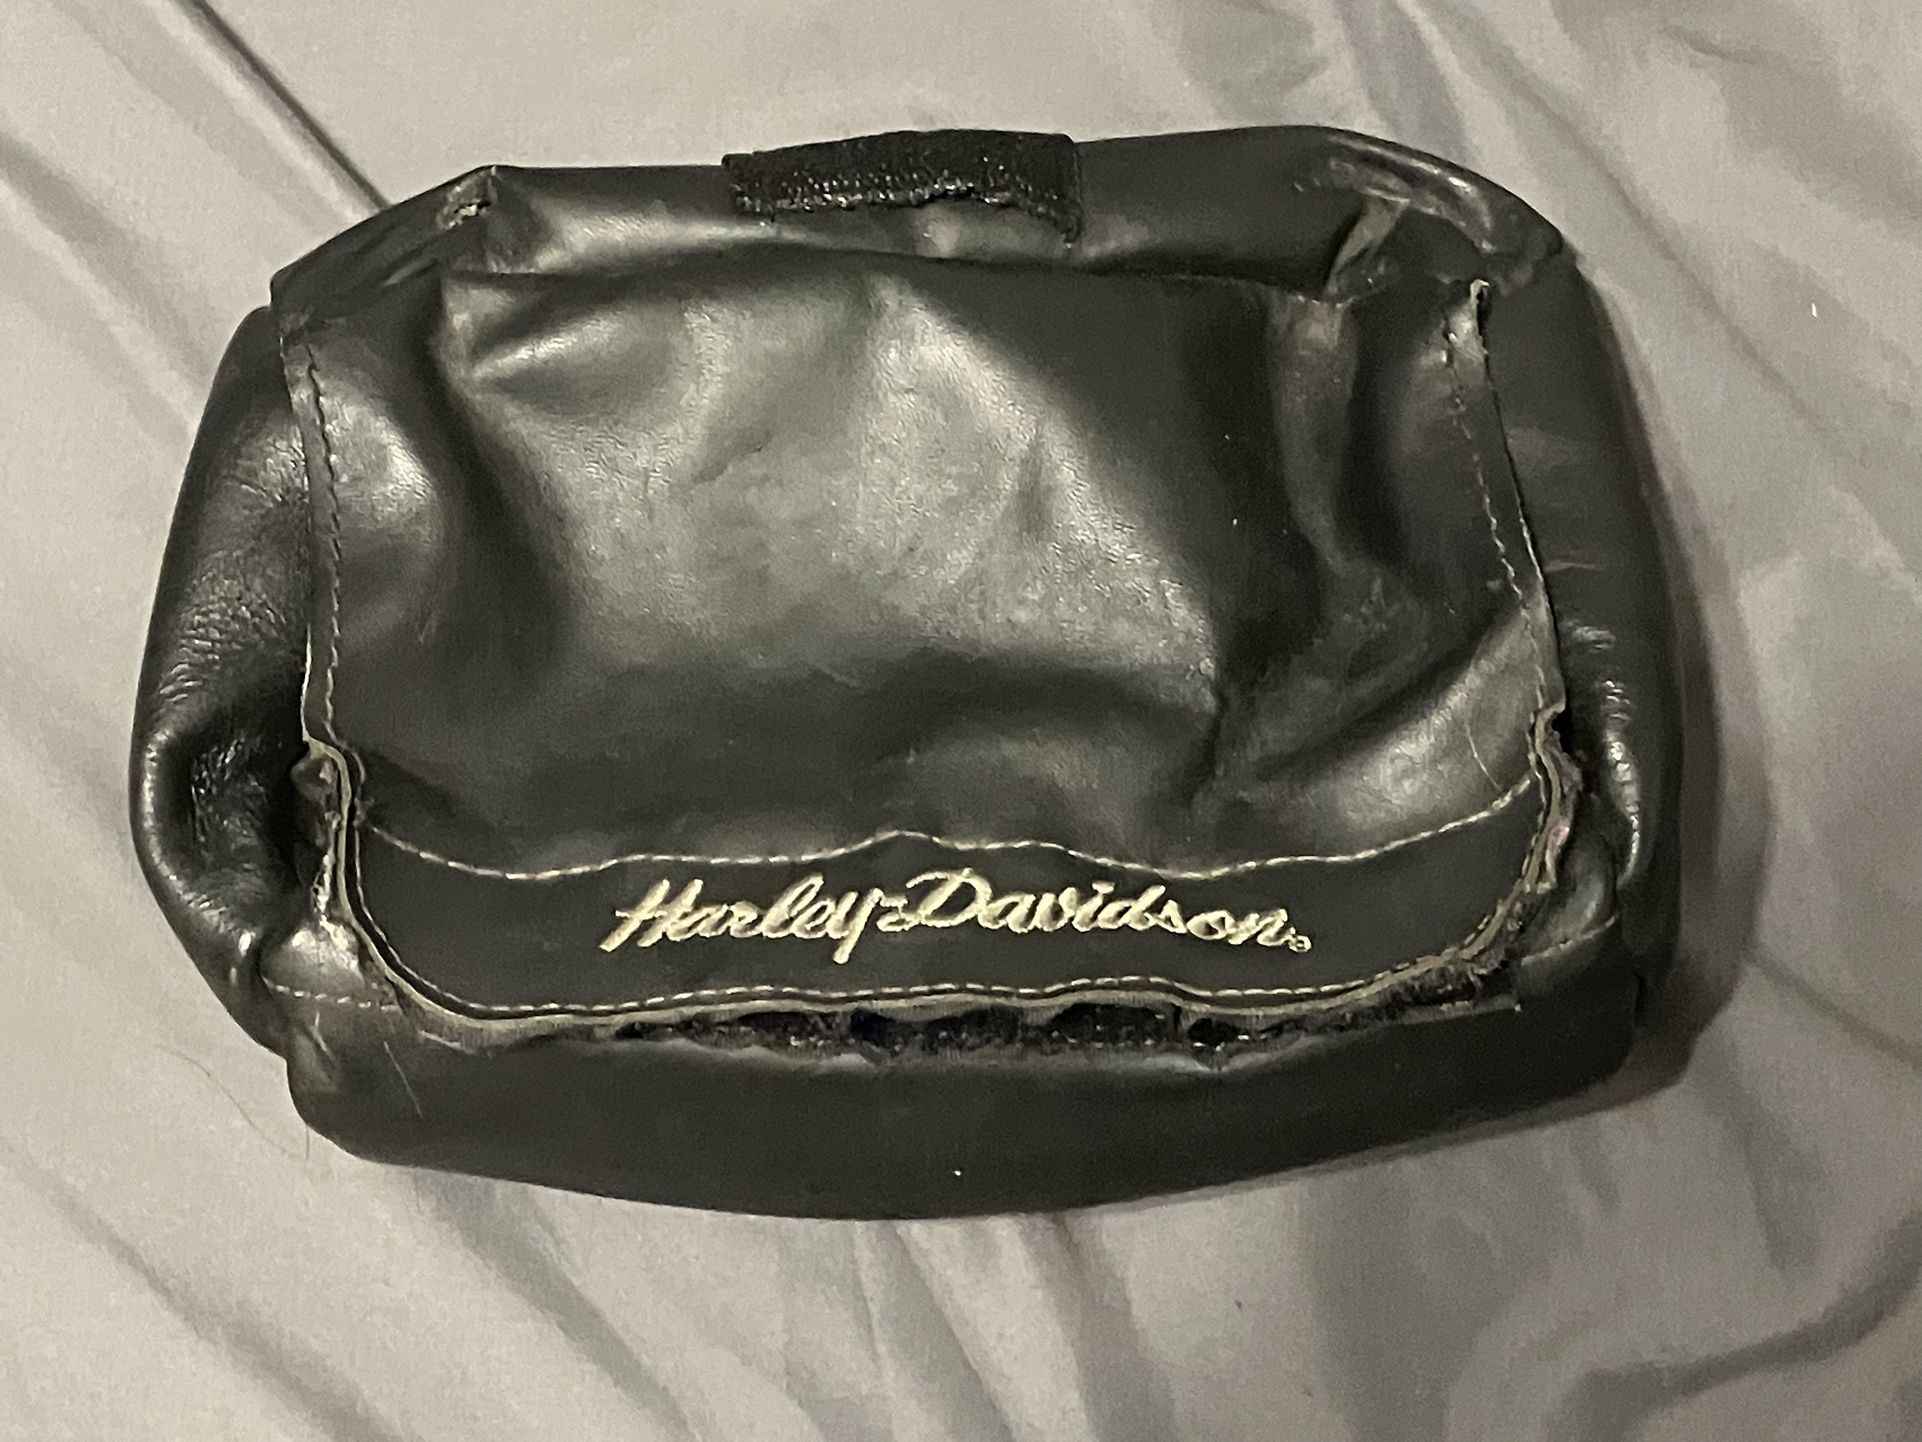 Harley Davidson Pouch 